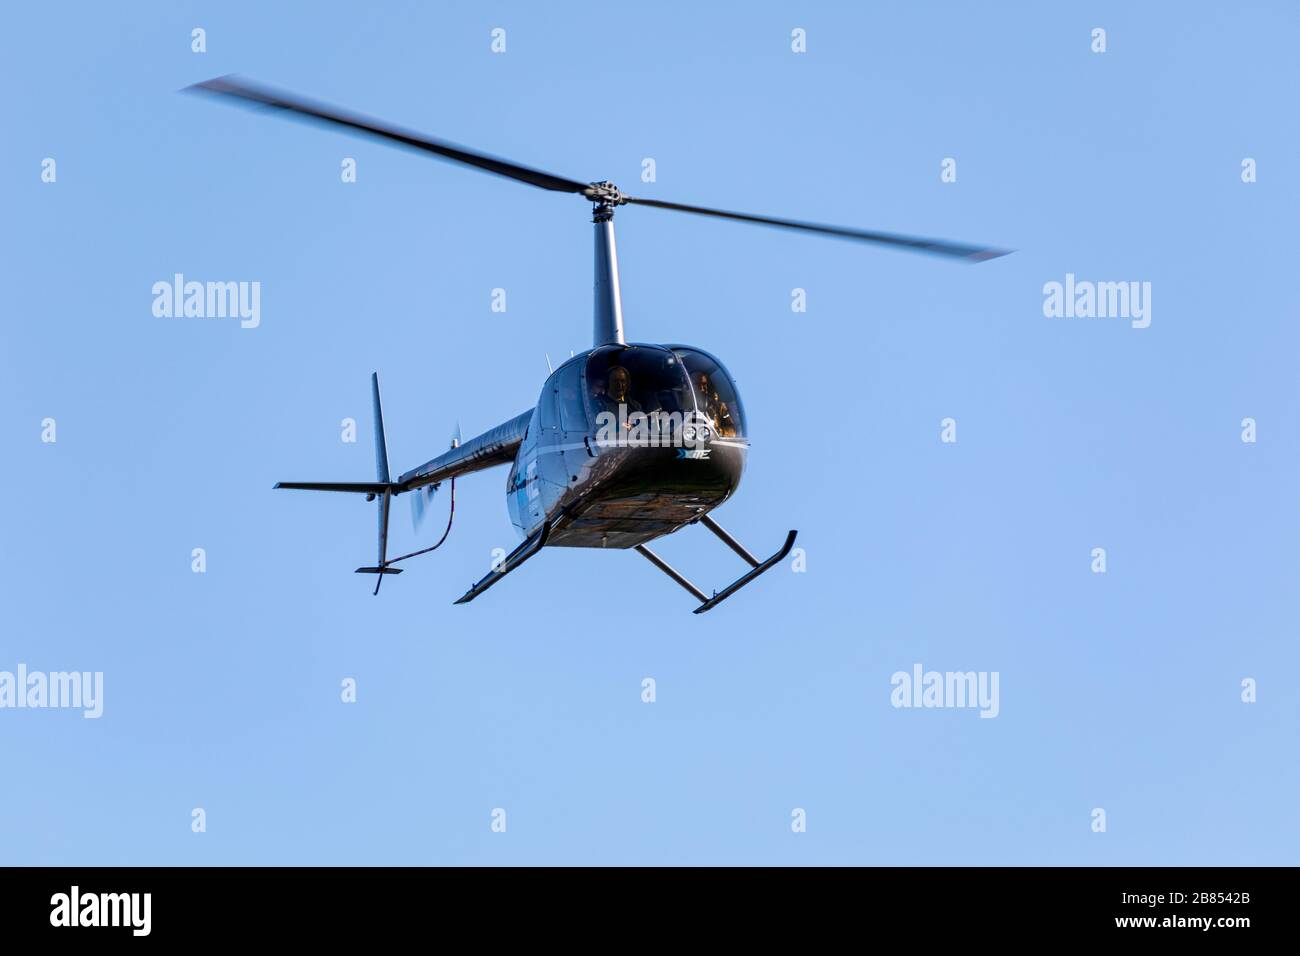 Small helicopter -Fotos und -Bildmaterial in hoher Auflösung – Alamy